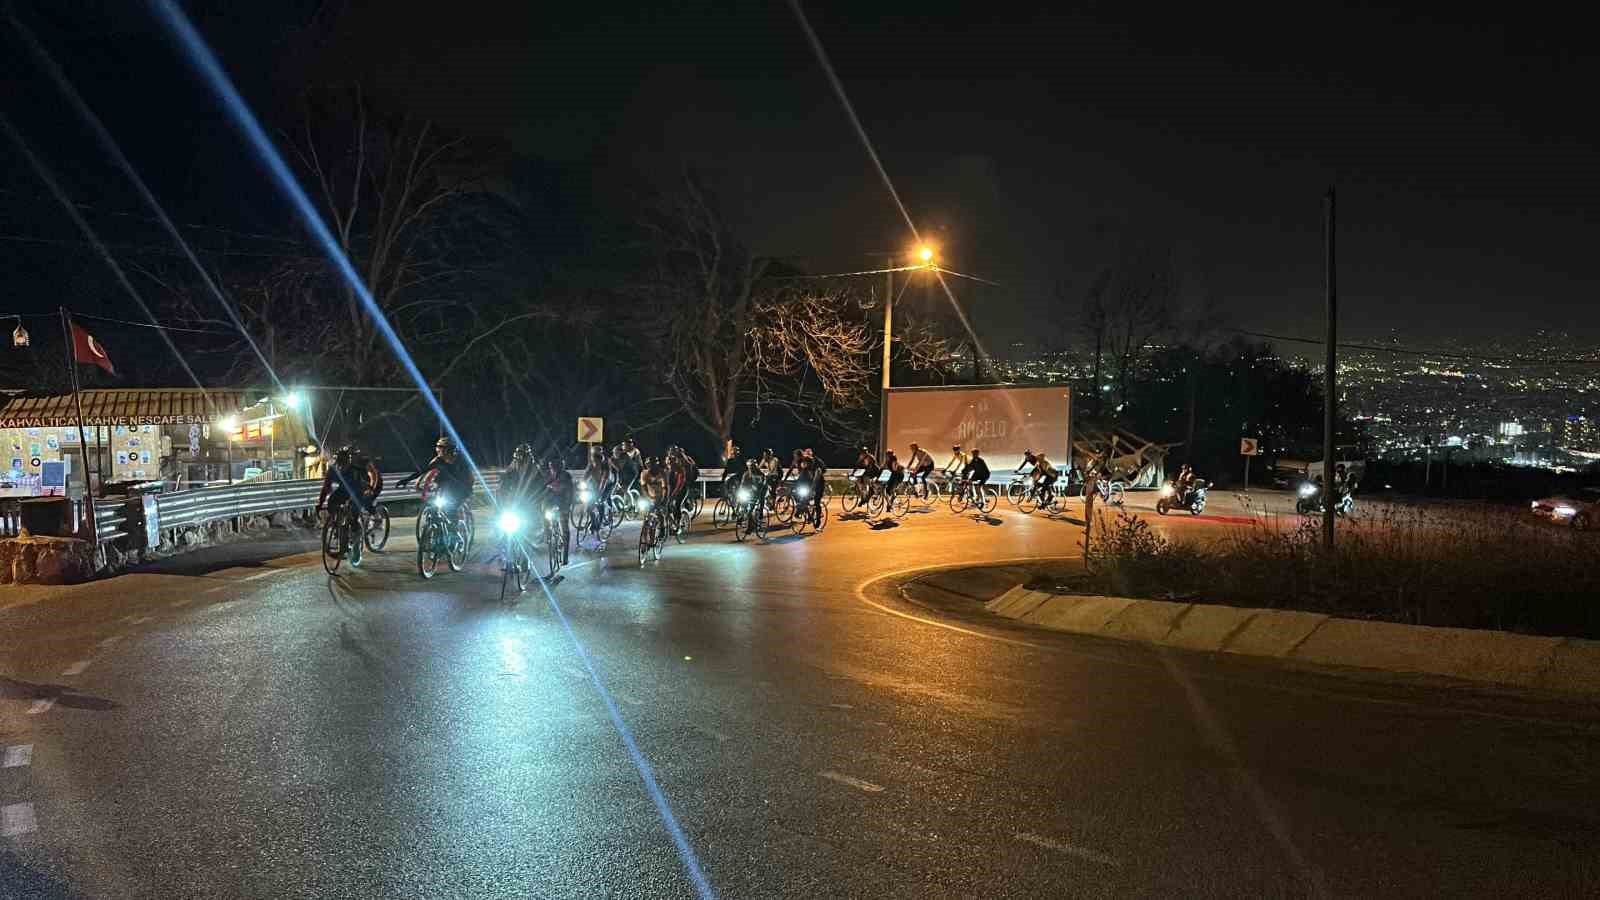 bisiklet tutkunlari iftar sonrasi uludaga pedal cevirdi 3 iwTBS4AH